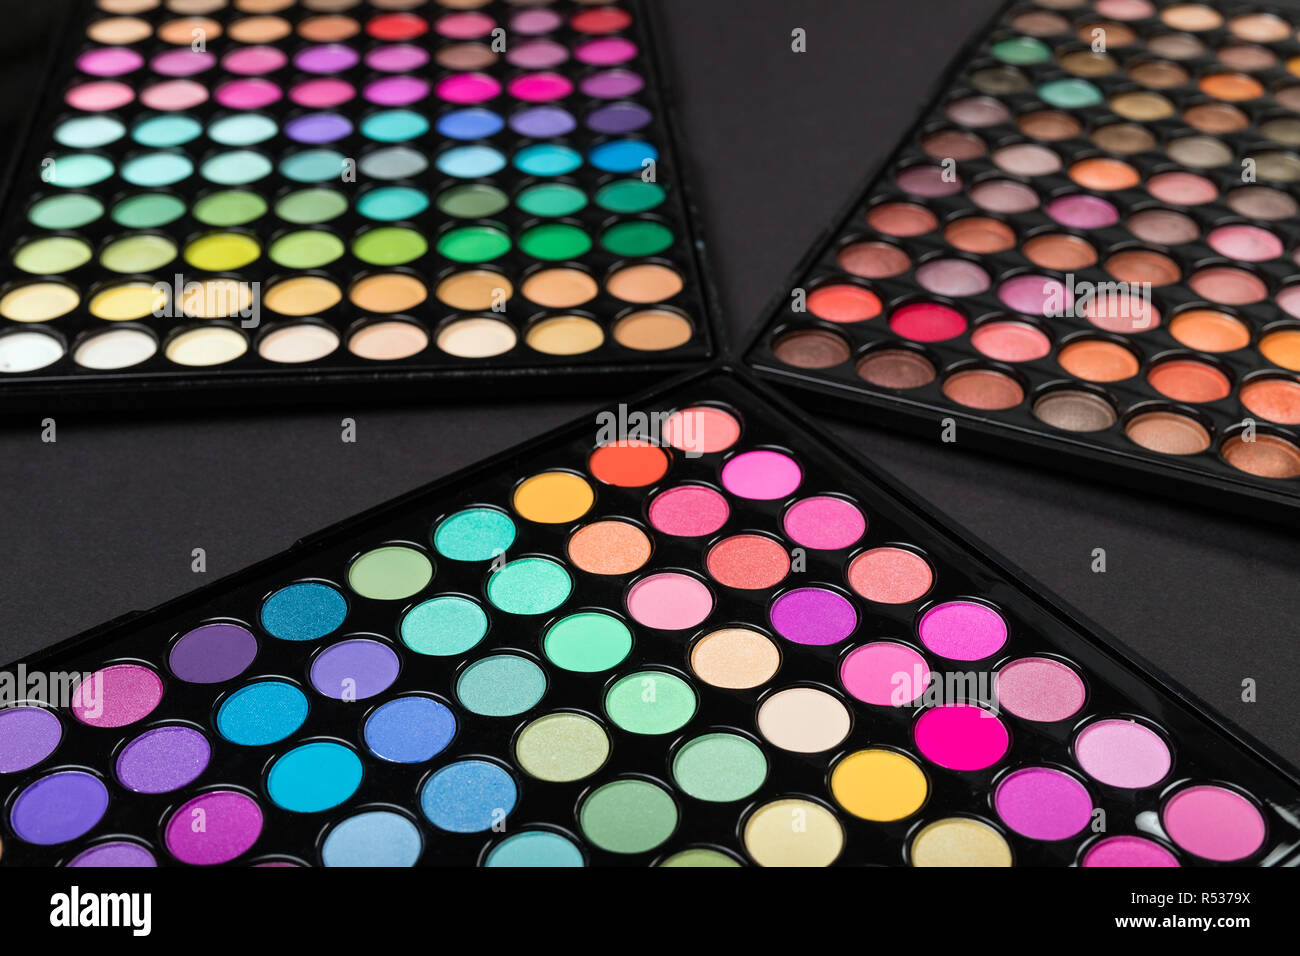 Make-up eyshadow palettes on a black background Stock Photo